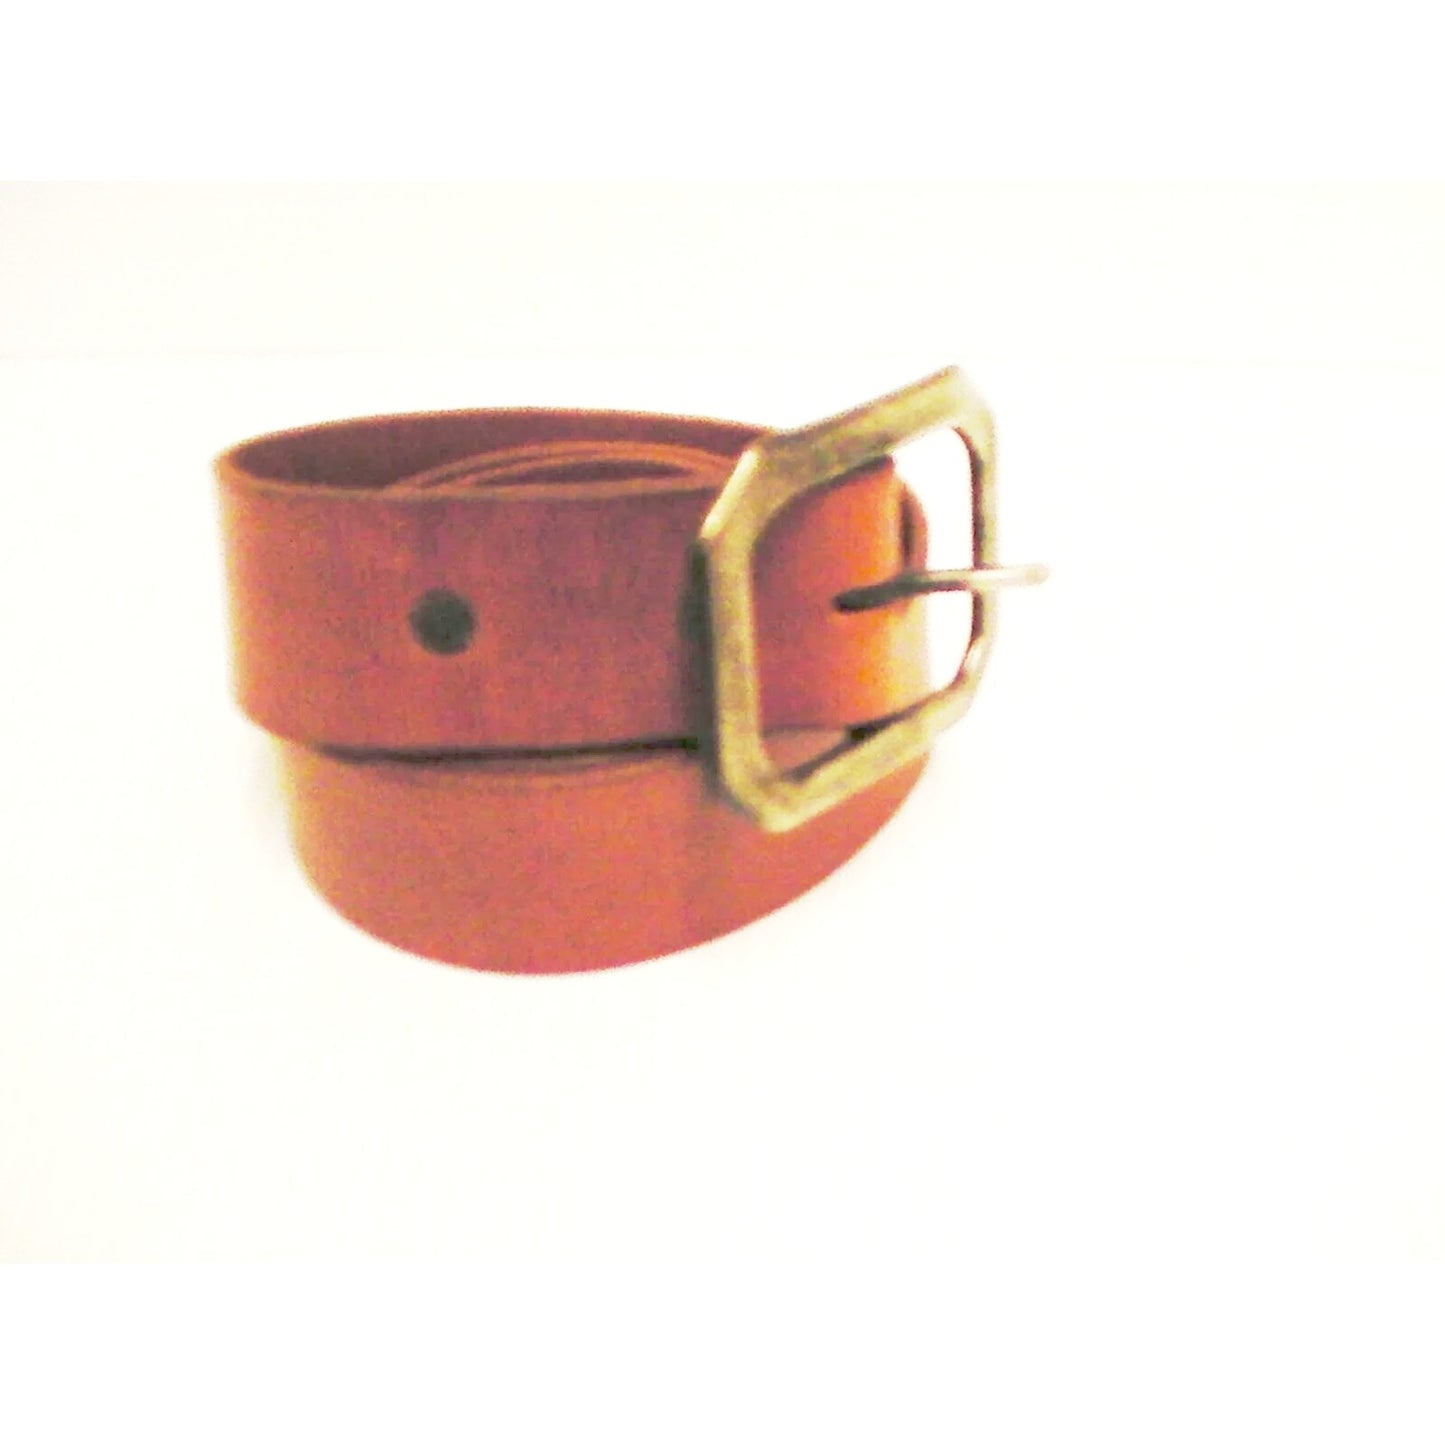 True religion genuine leather belt gunmetal buckle size 32 inch light brown new